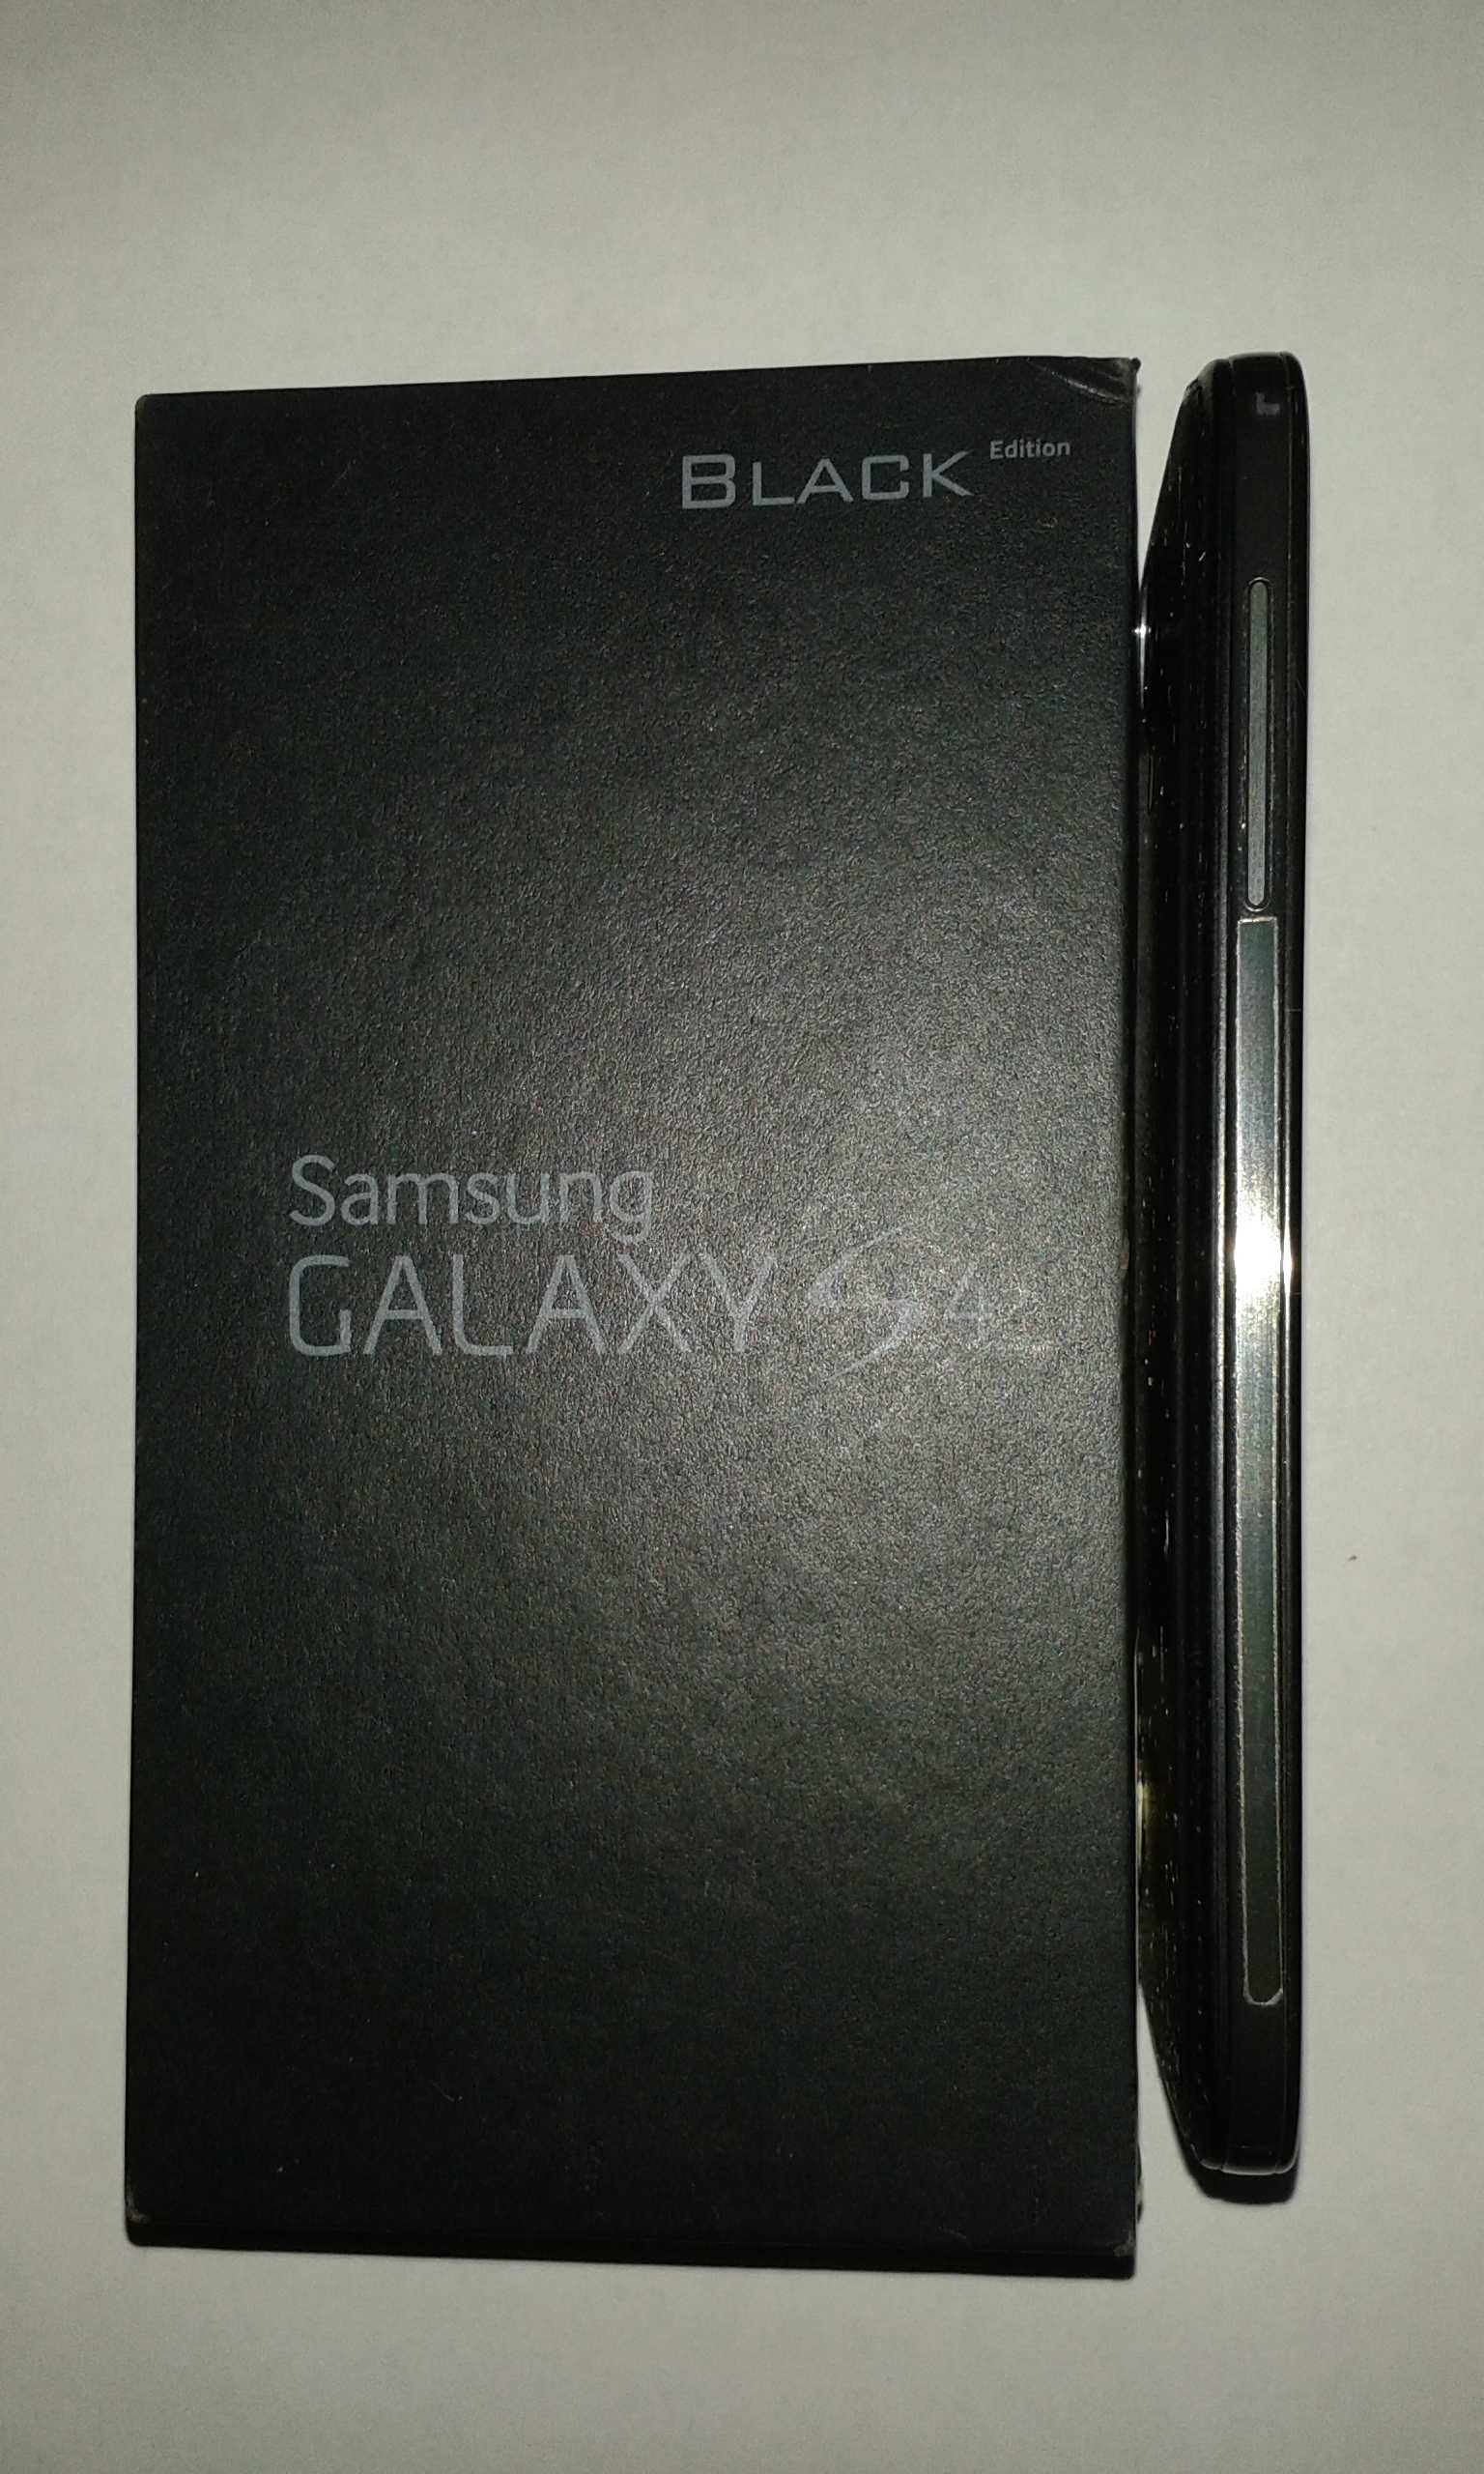 Samsung Galaxy S4 i9500 (Black Edition)/Под ремонт или на запчасти